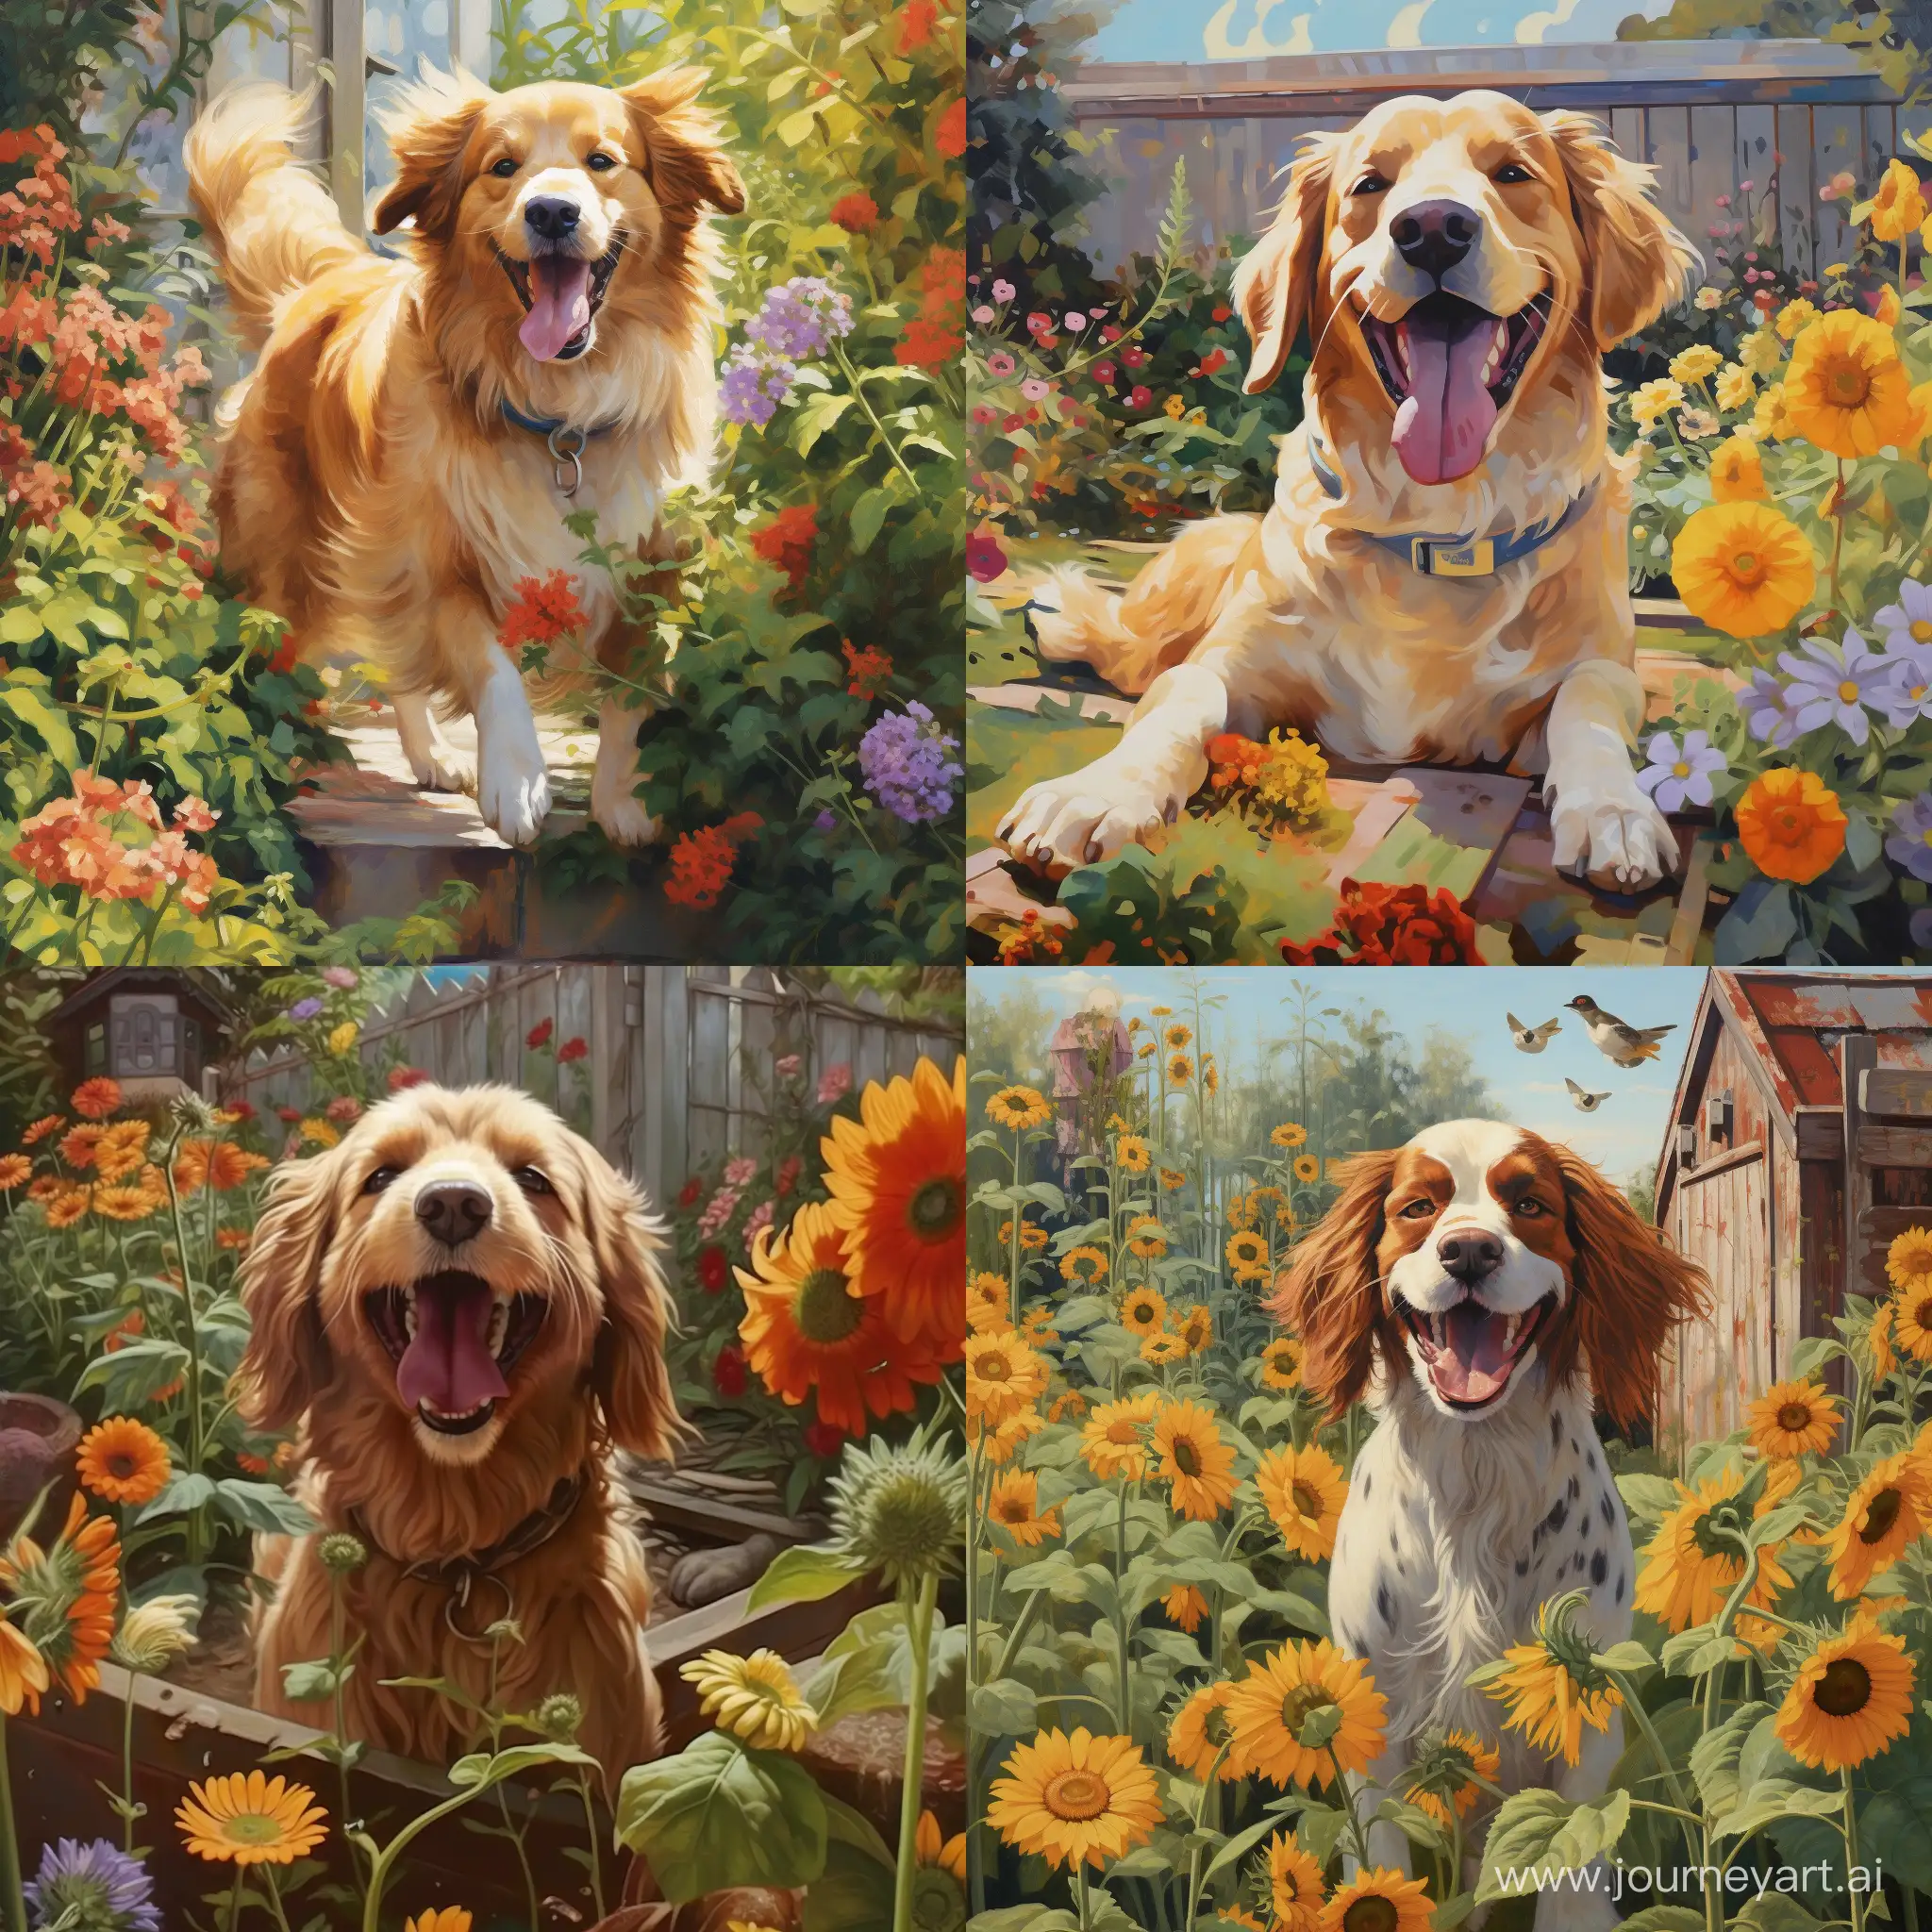 Joyful-Canine-Frolicking-in-Lush-Garden-Paradise